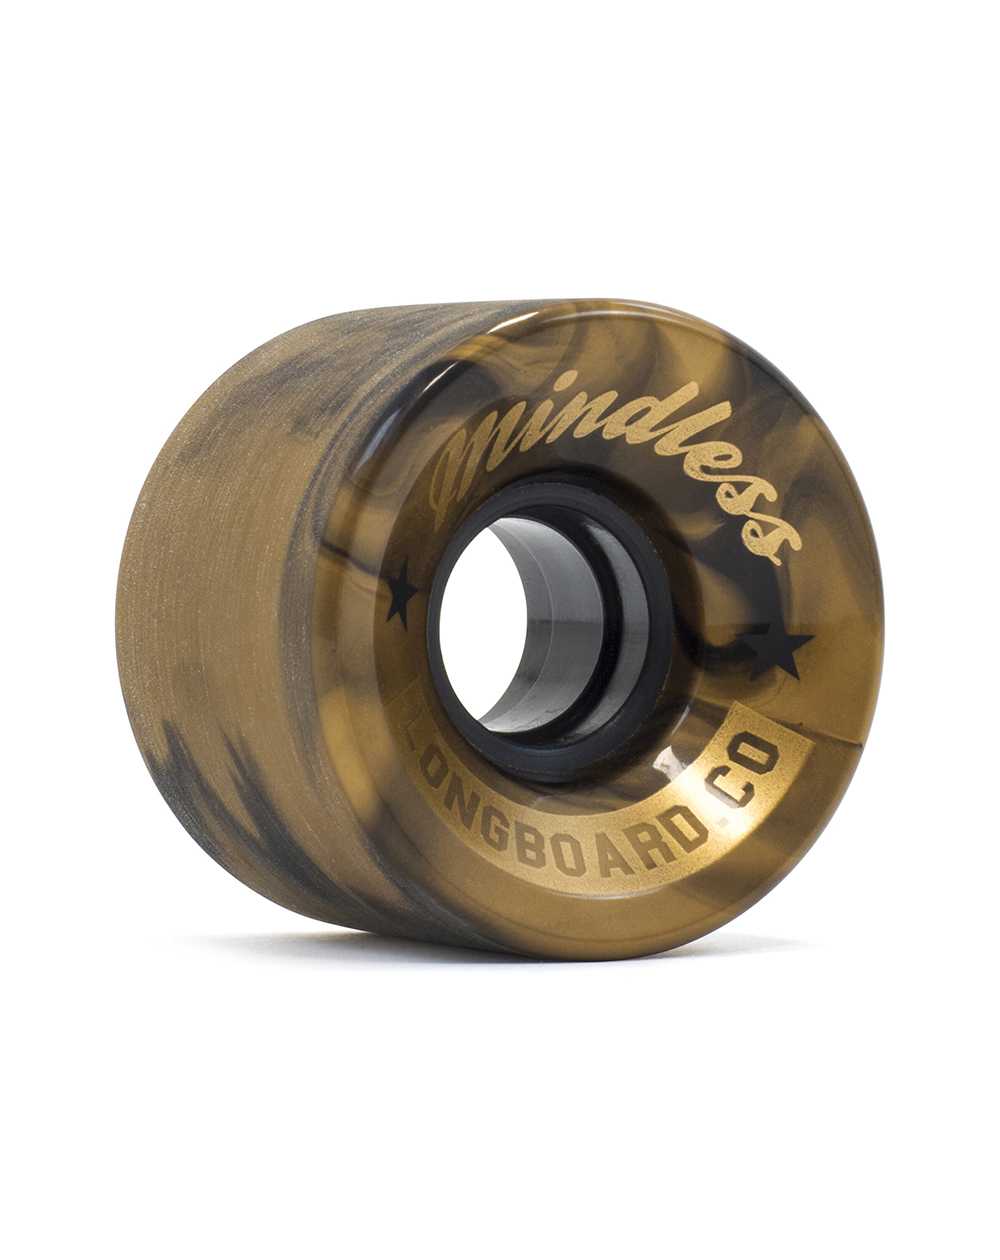 Mindless Cruiser 60mm 83A Skateboard Wheels Swirl/Bronze pack of 4